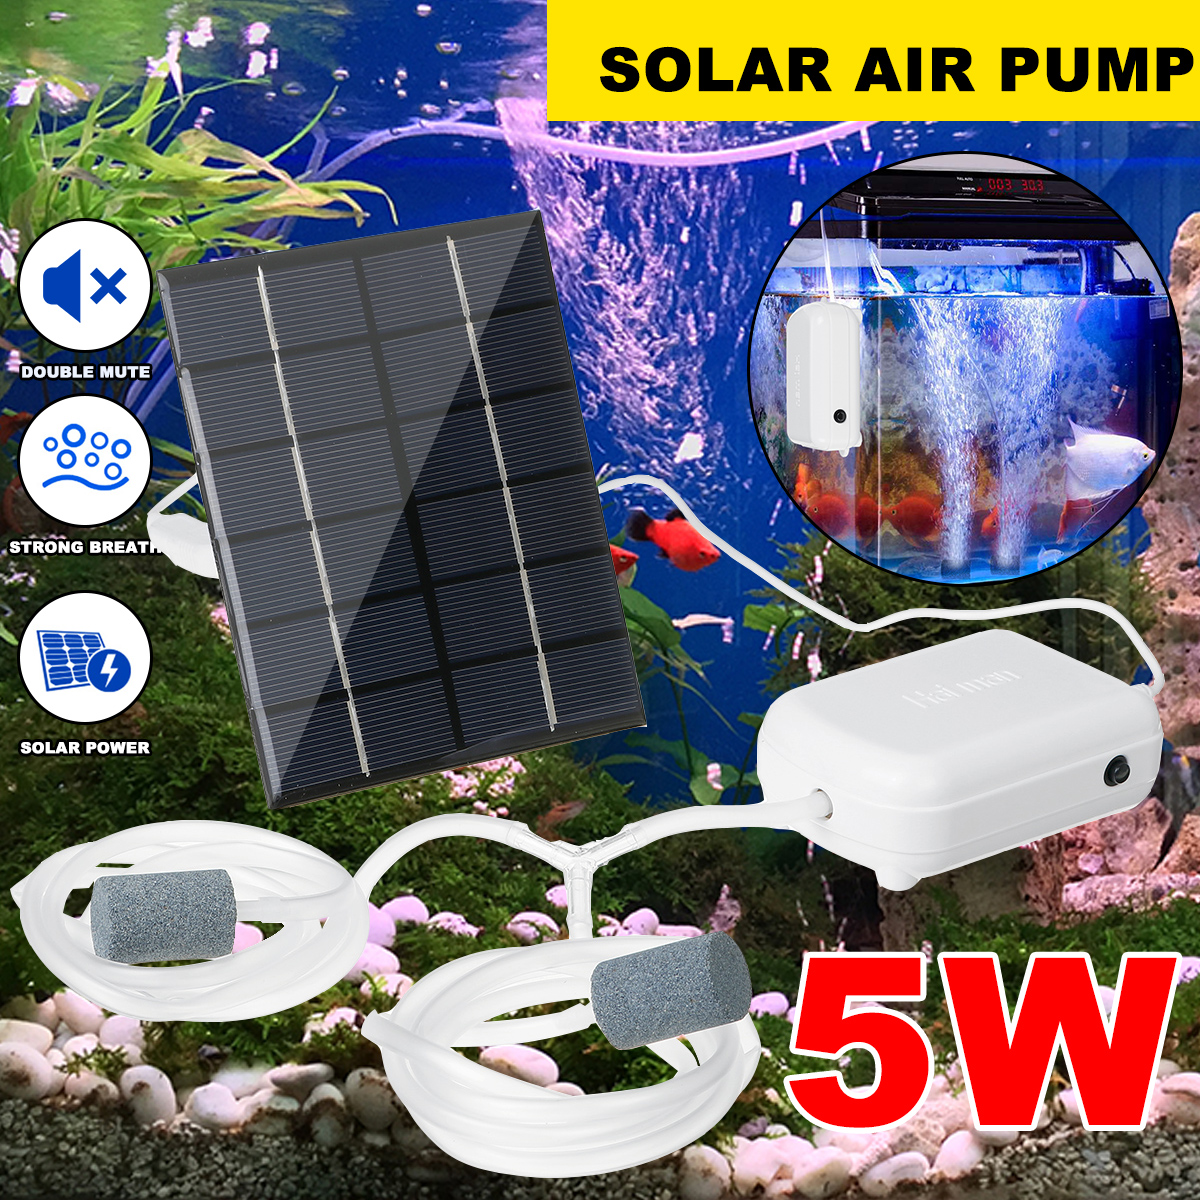 Solar-Powered-Air-Pump-Kit-5W-Solar-Panel-Oxygen-increasing-Oxygen-Air-Pump-Waterproof-1876248-1